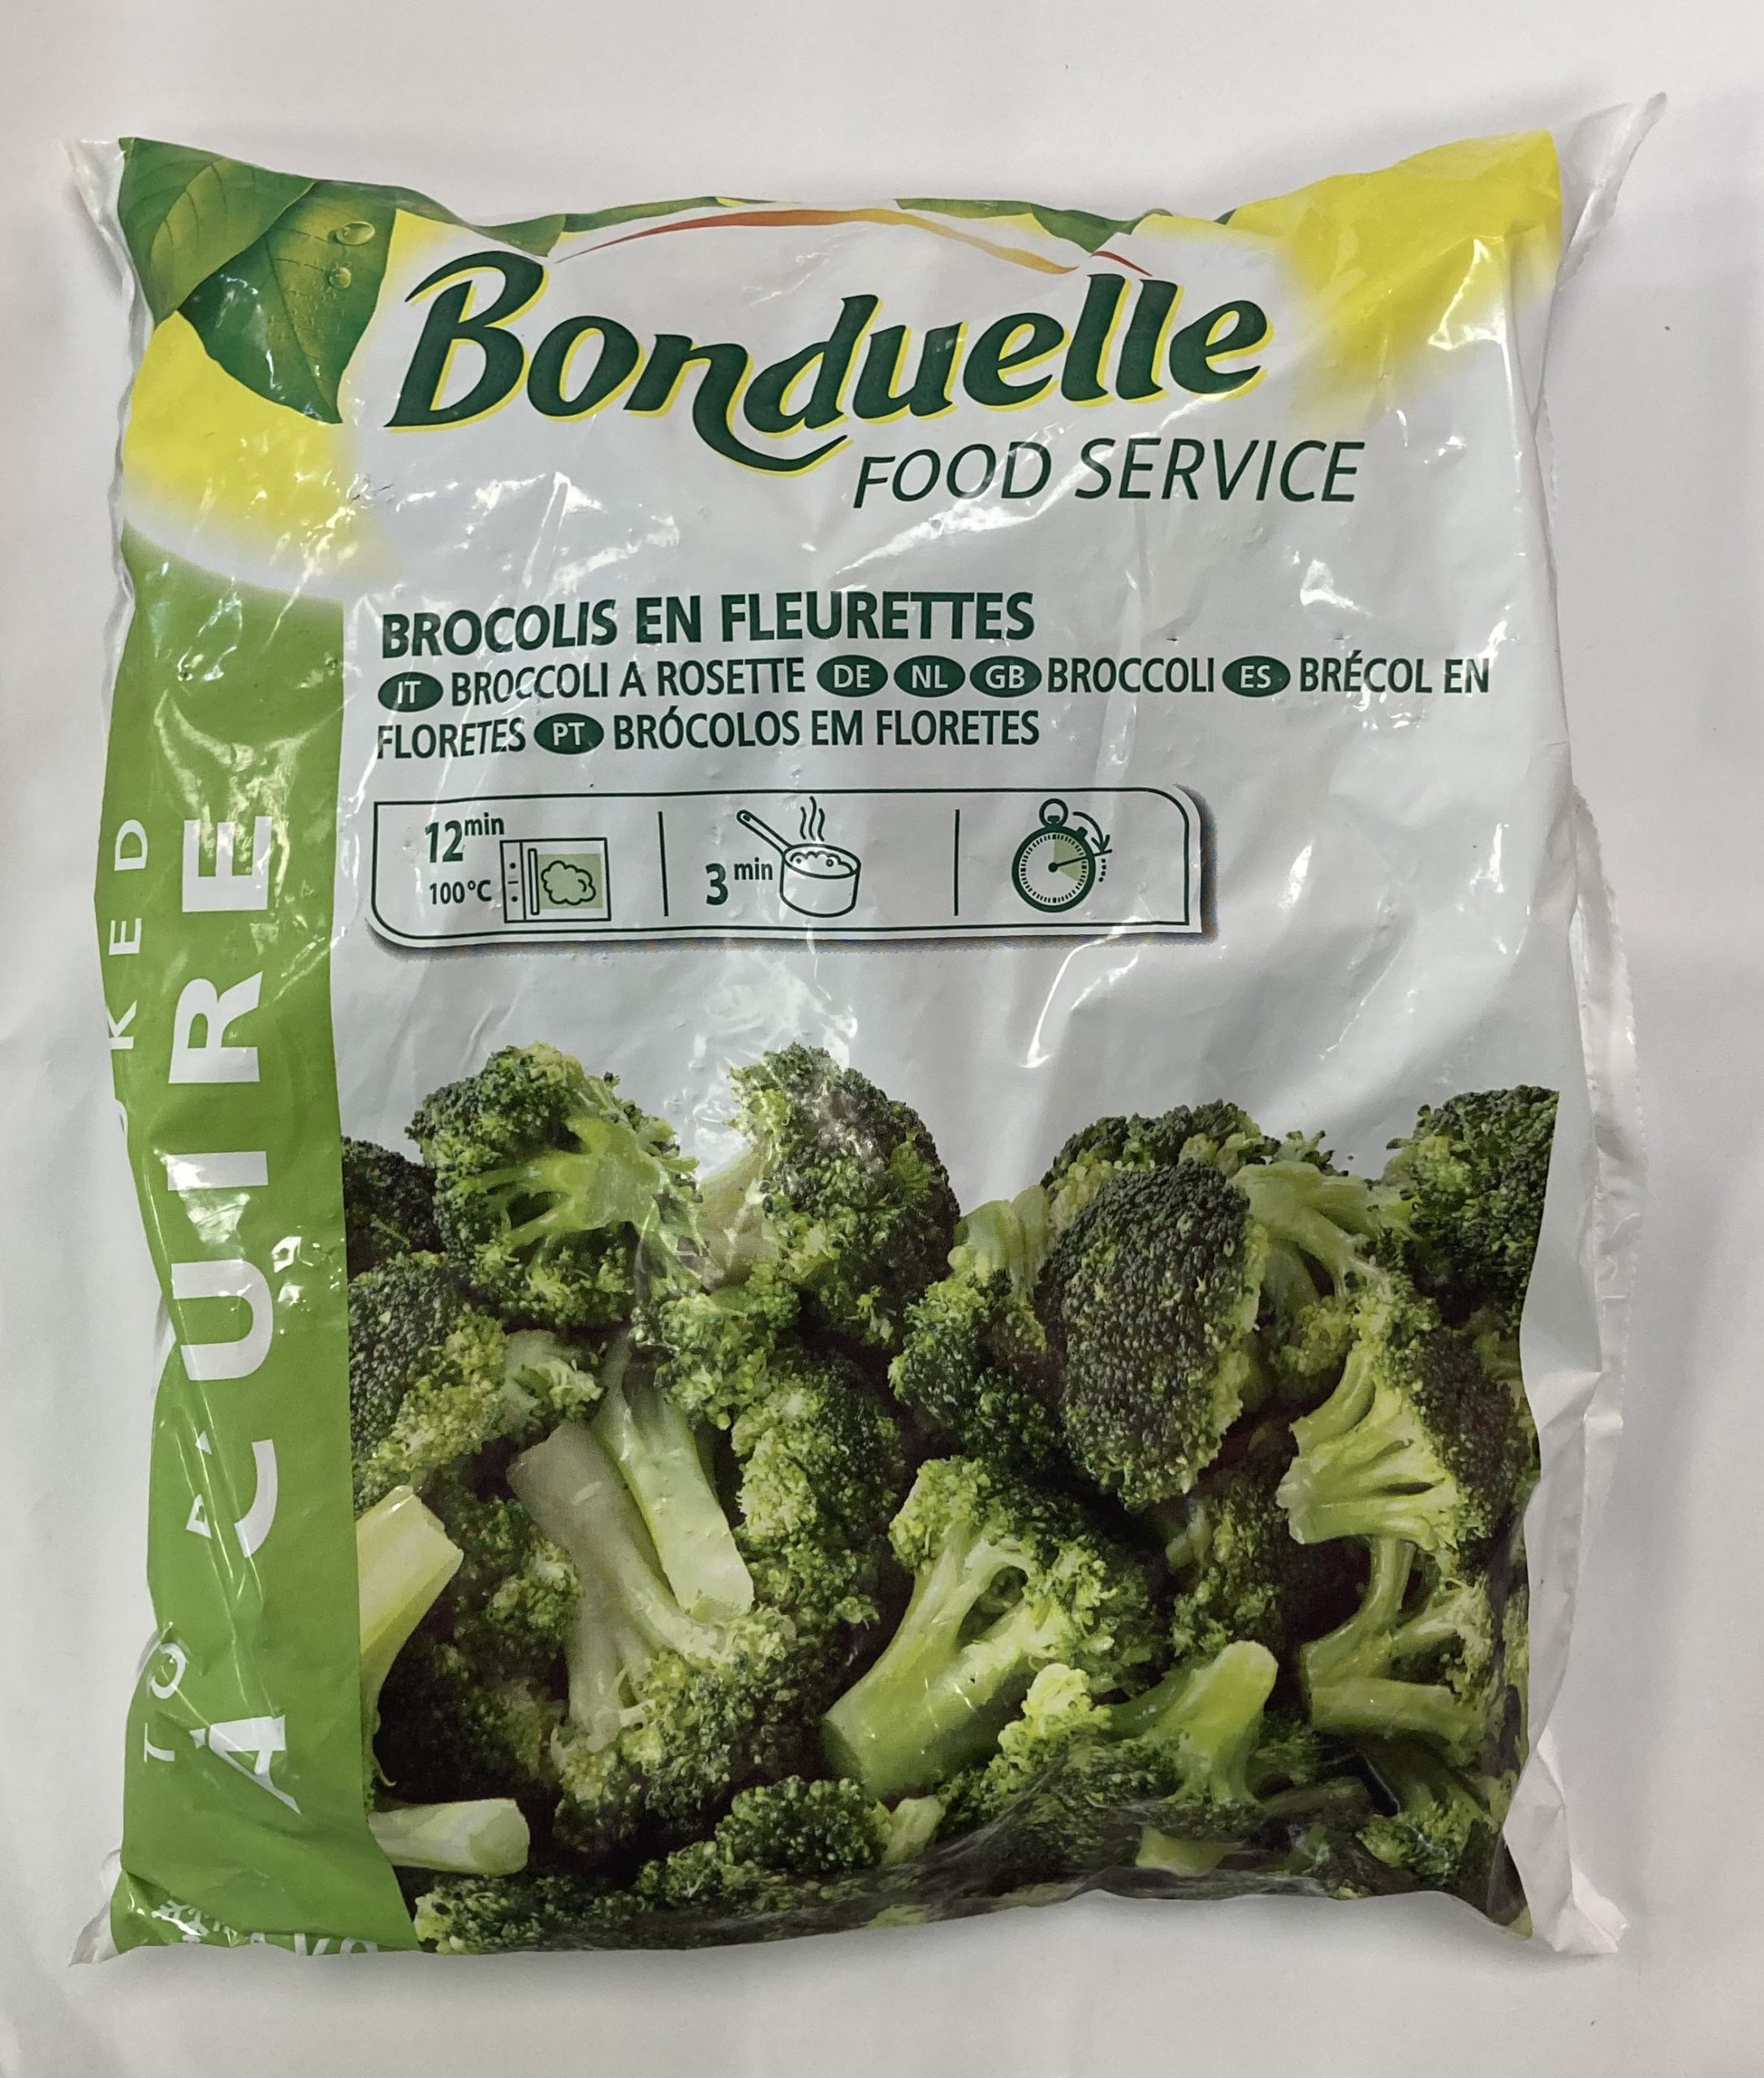 Broccoli Bonduelle